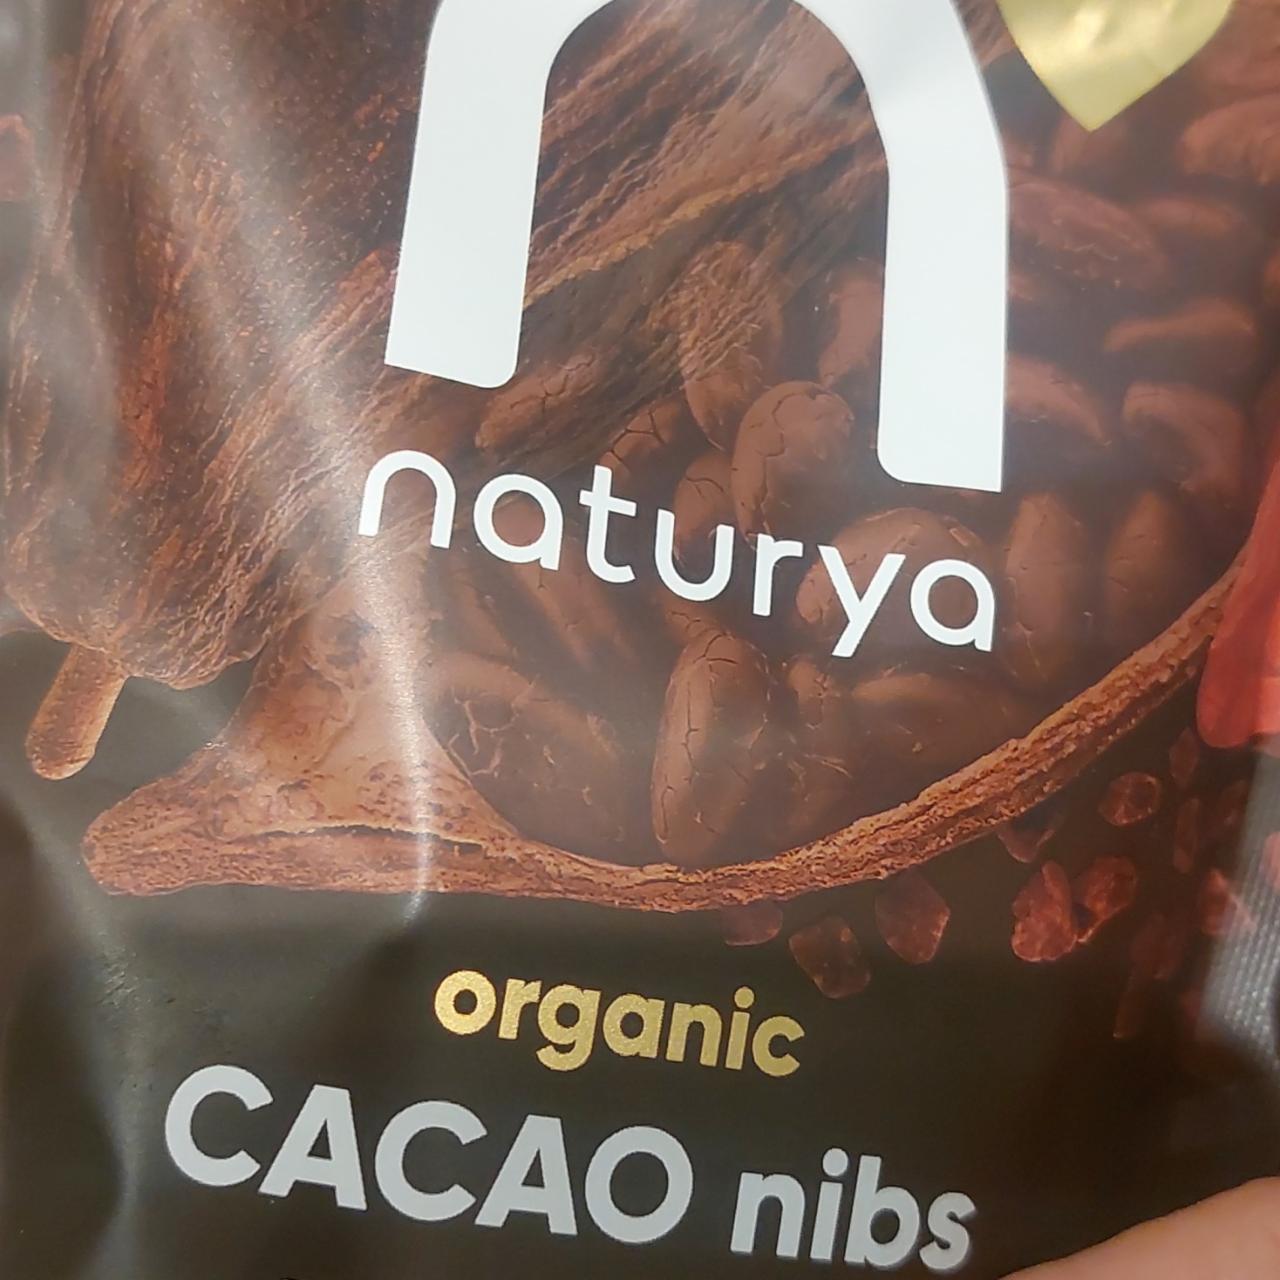 Fotografie - Organic cacao nibs Naturya